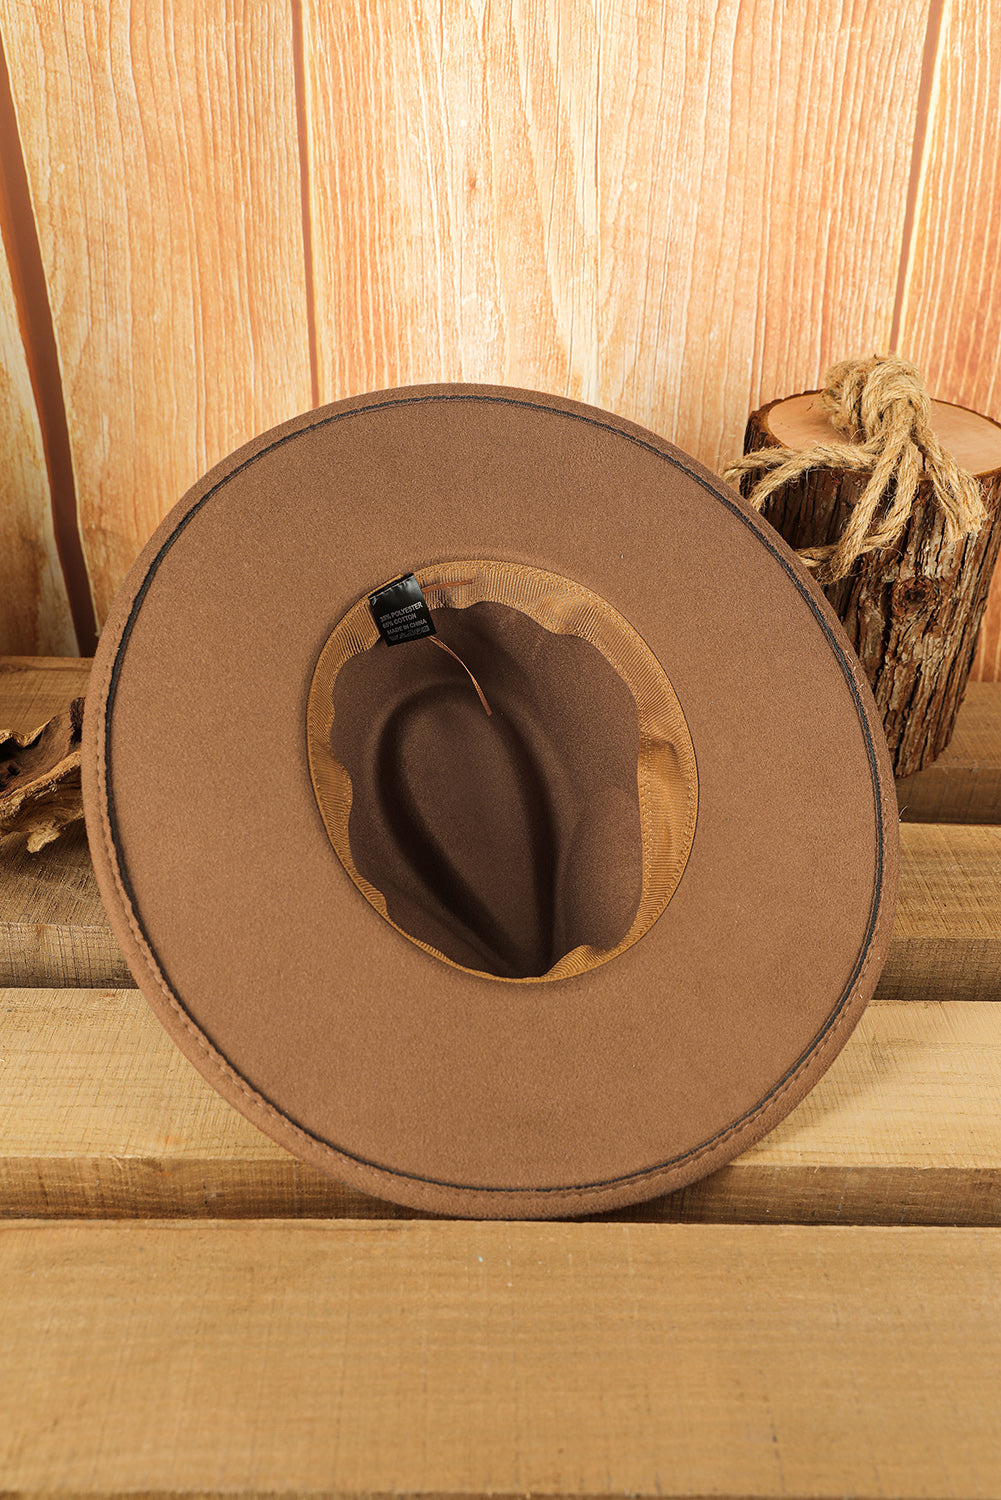 Brown Western Patchwork Flat Brim Cowboy Woven Hat